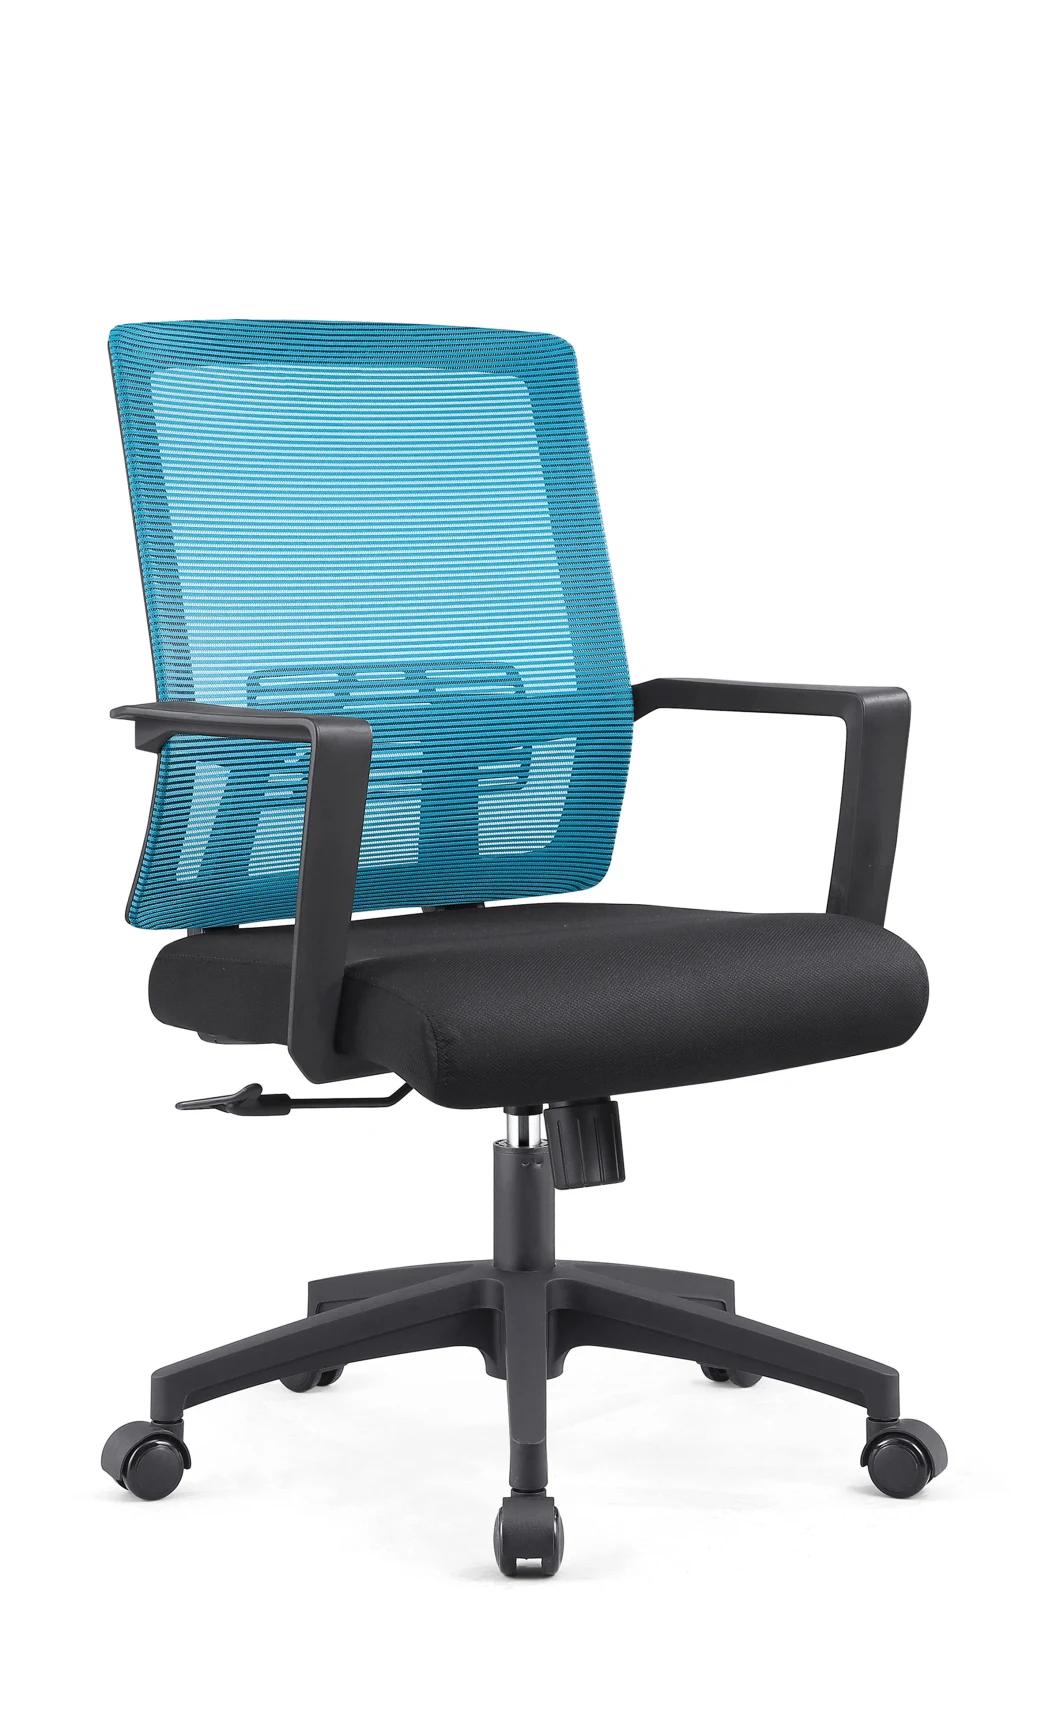 Modern New Hot Popular Ergonomic Mesh Office Chair Mesh Back Swivel Mesh Chair Manager Chair Executive Staff Chair (2018B)